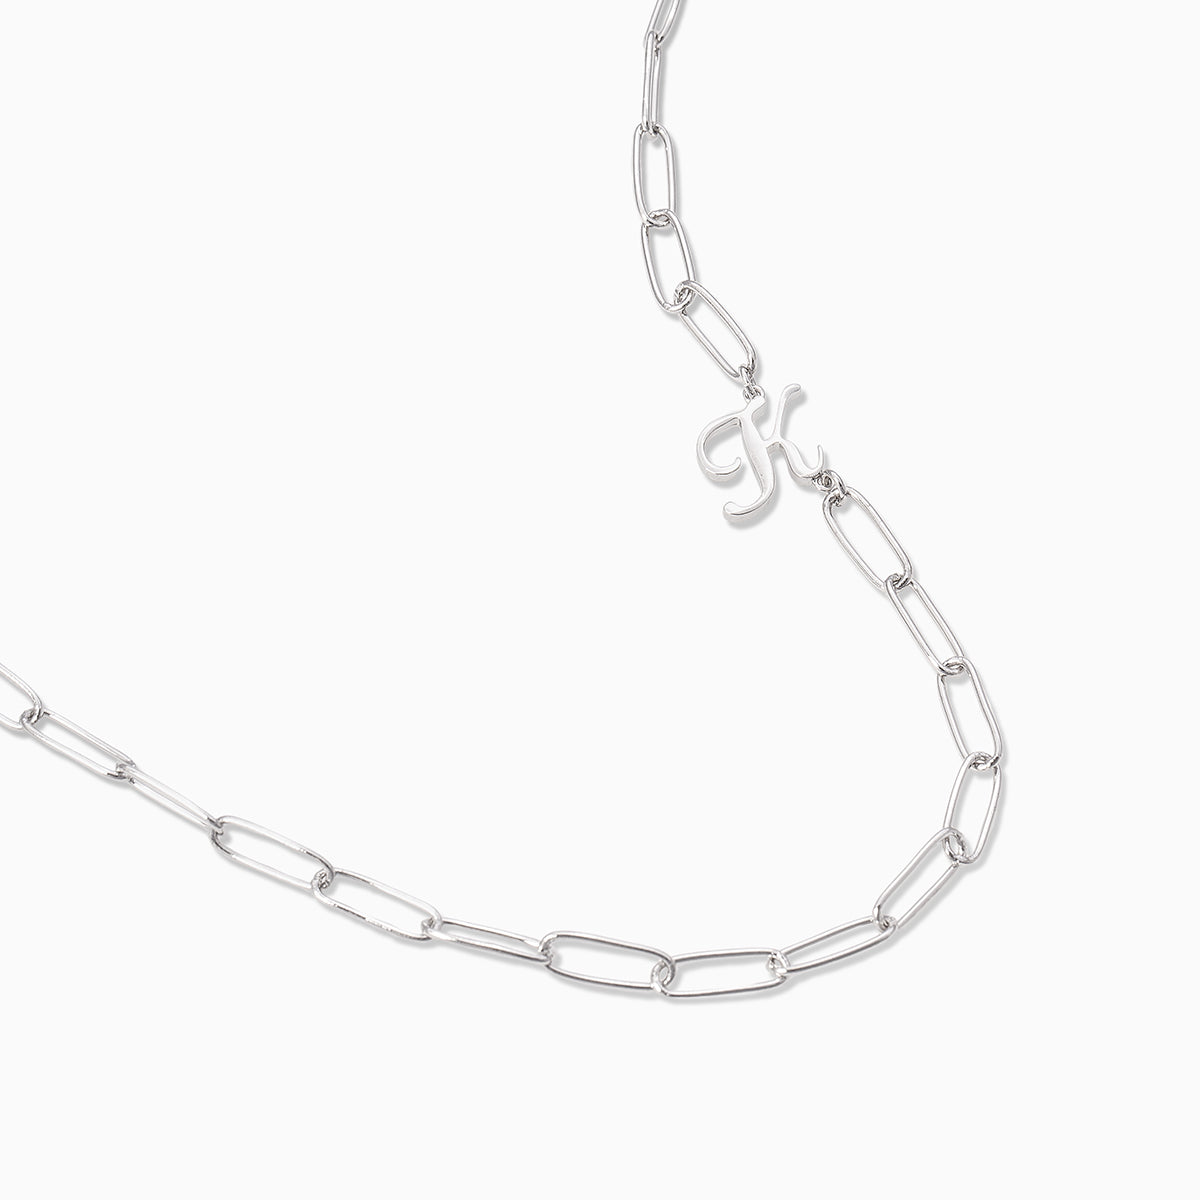 Cursive Initial Necklace | Silver | Product Detail Image | Uncommon James